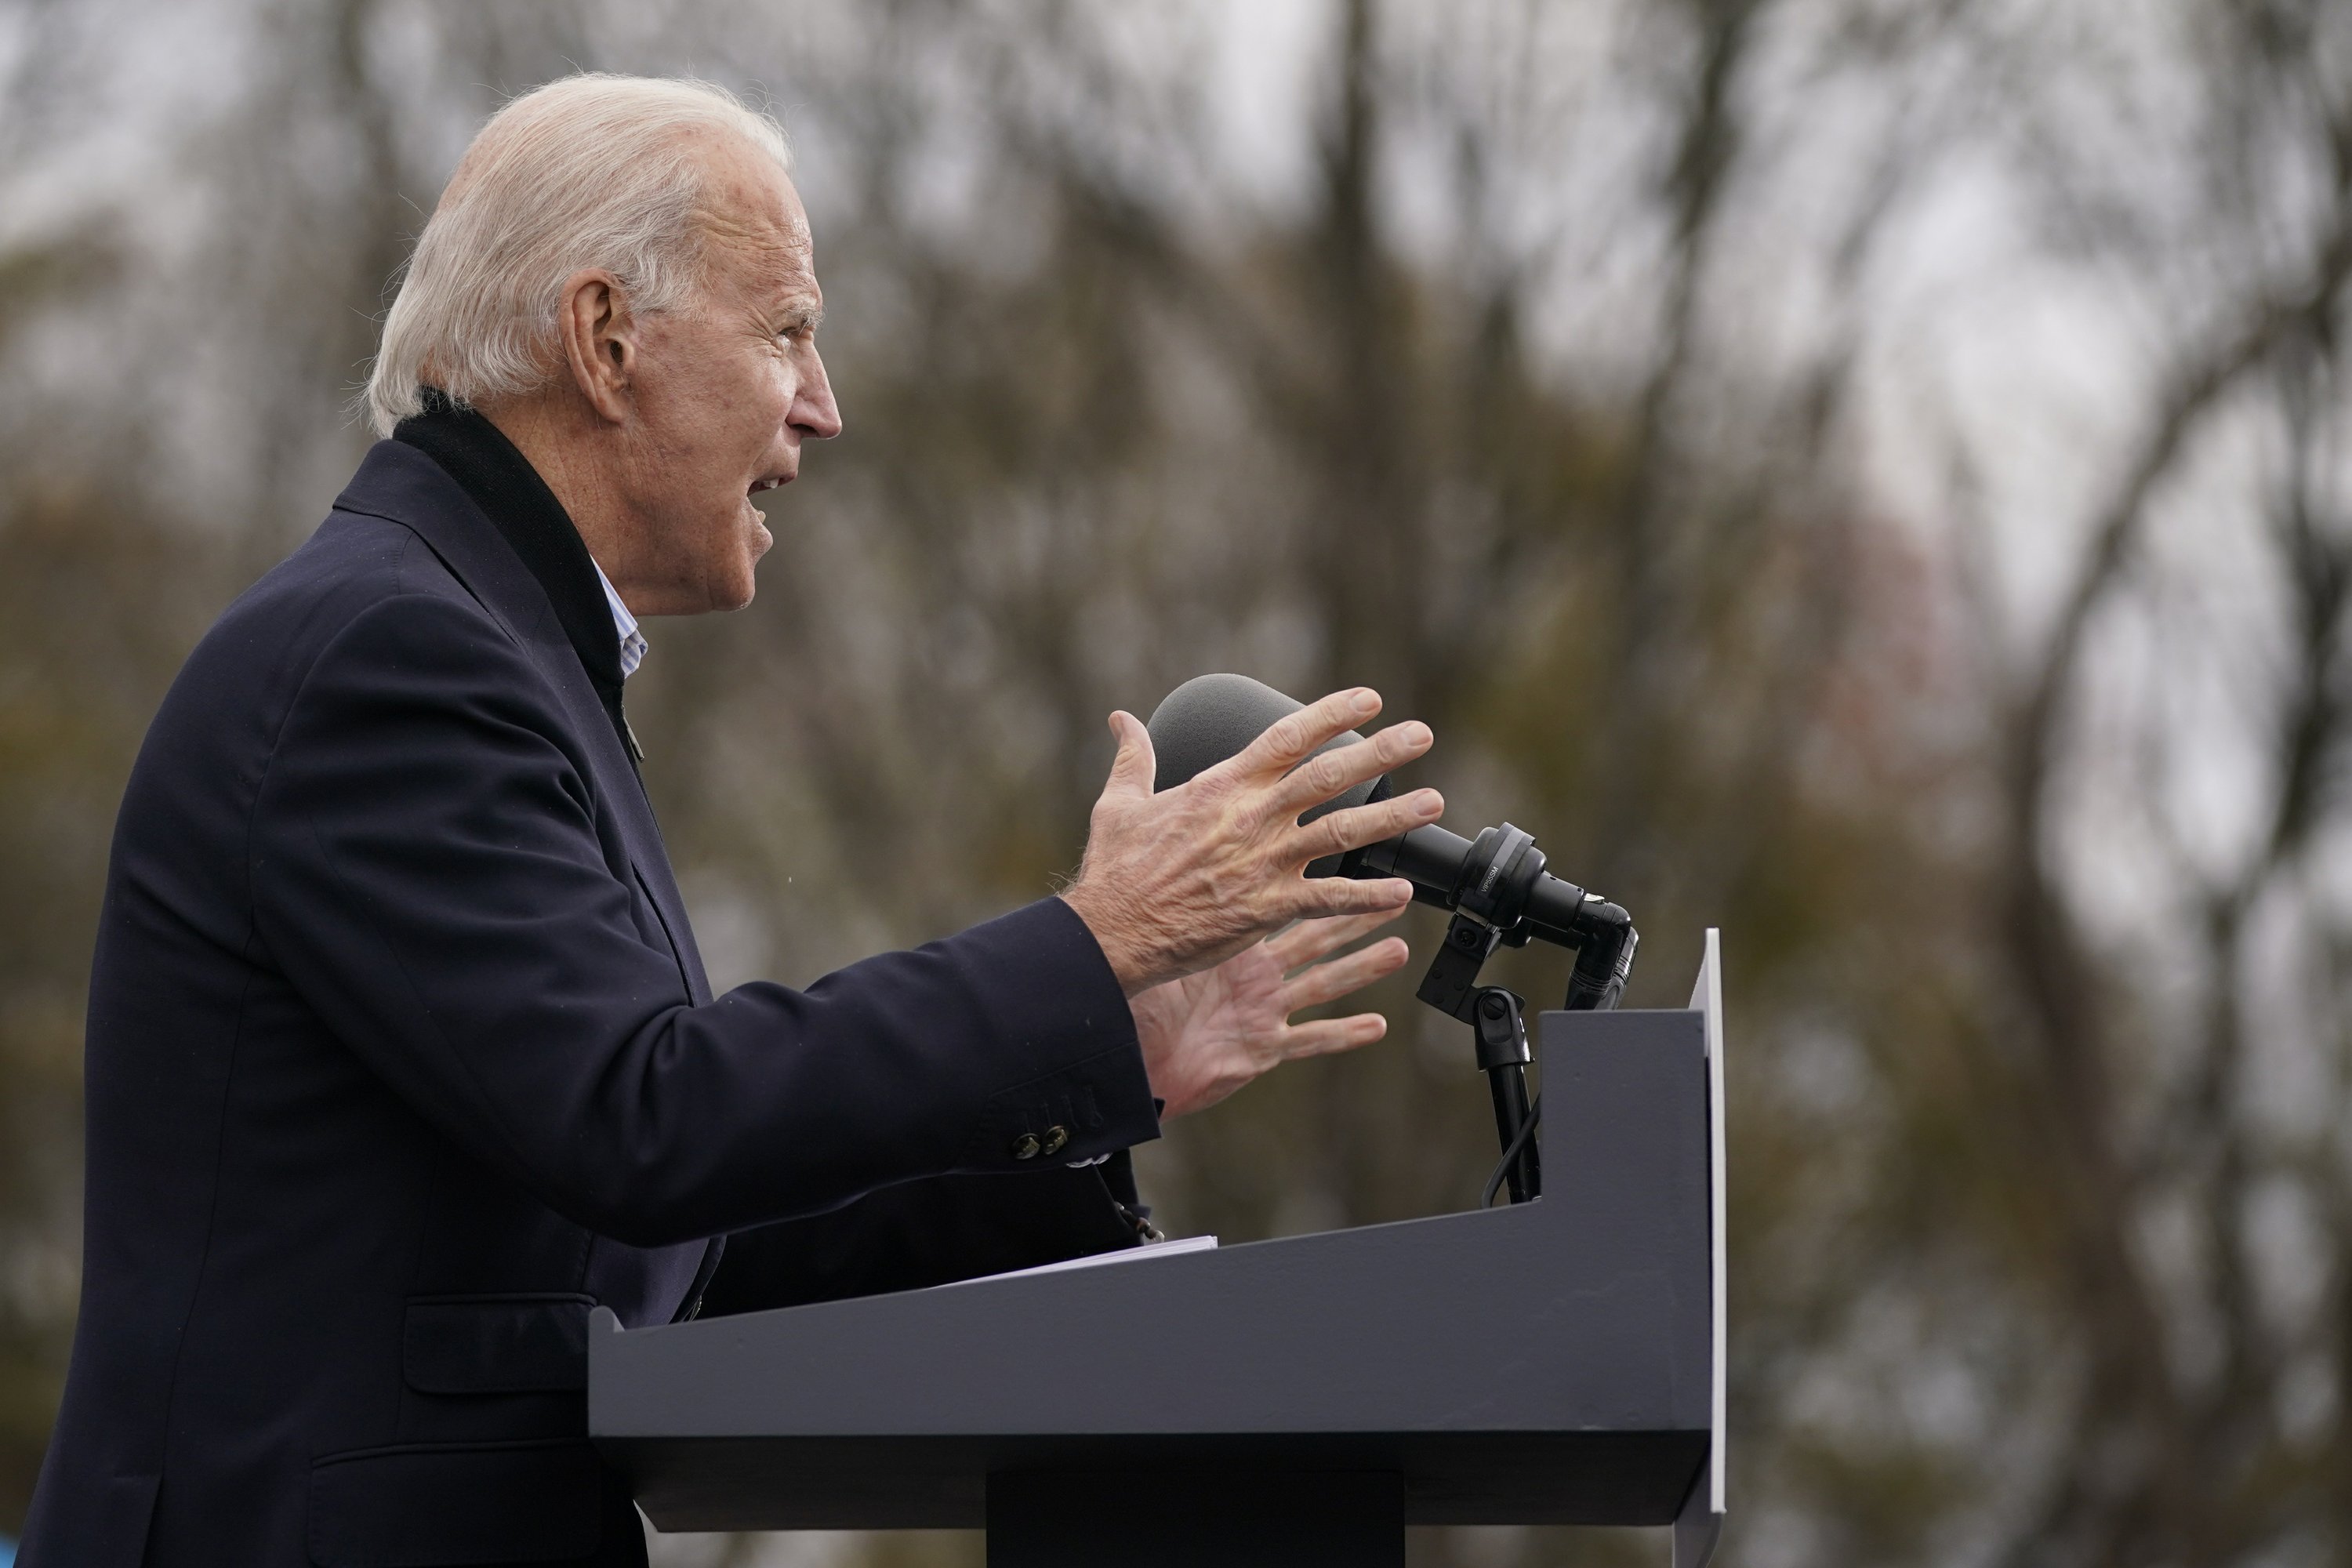 In Georgia, Biden’s presidency meets an early defining moment